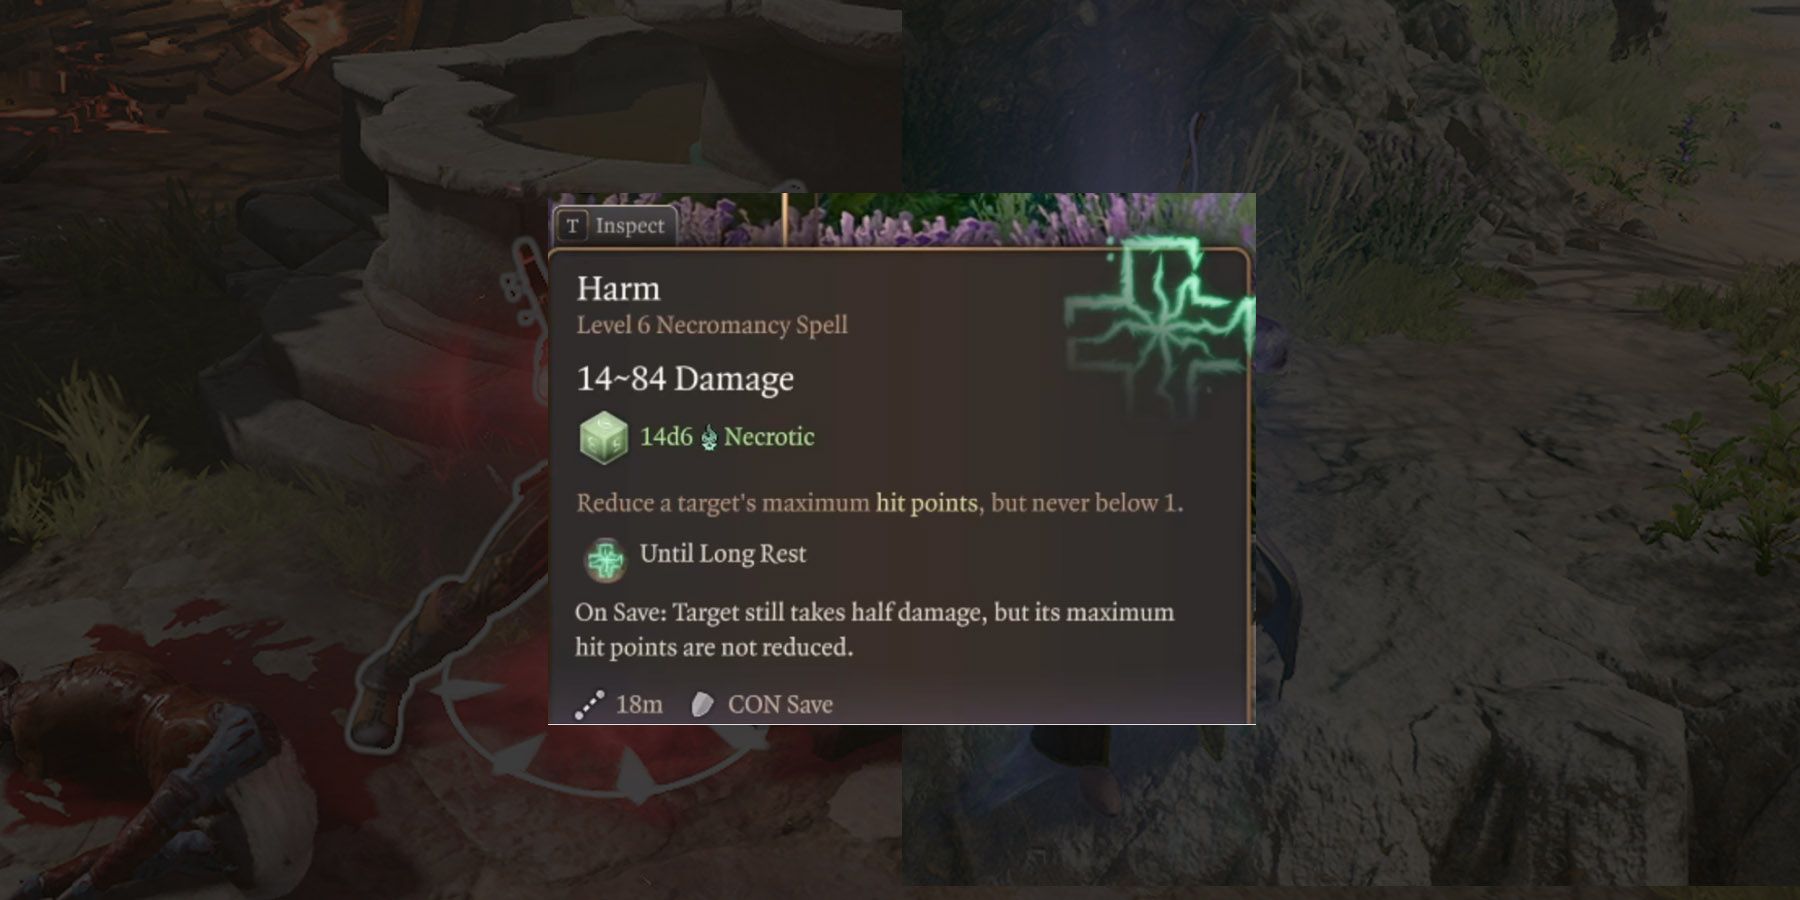 Harm in Baldur's Gate 3